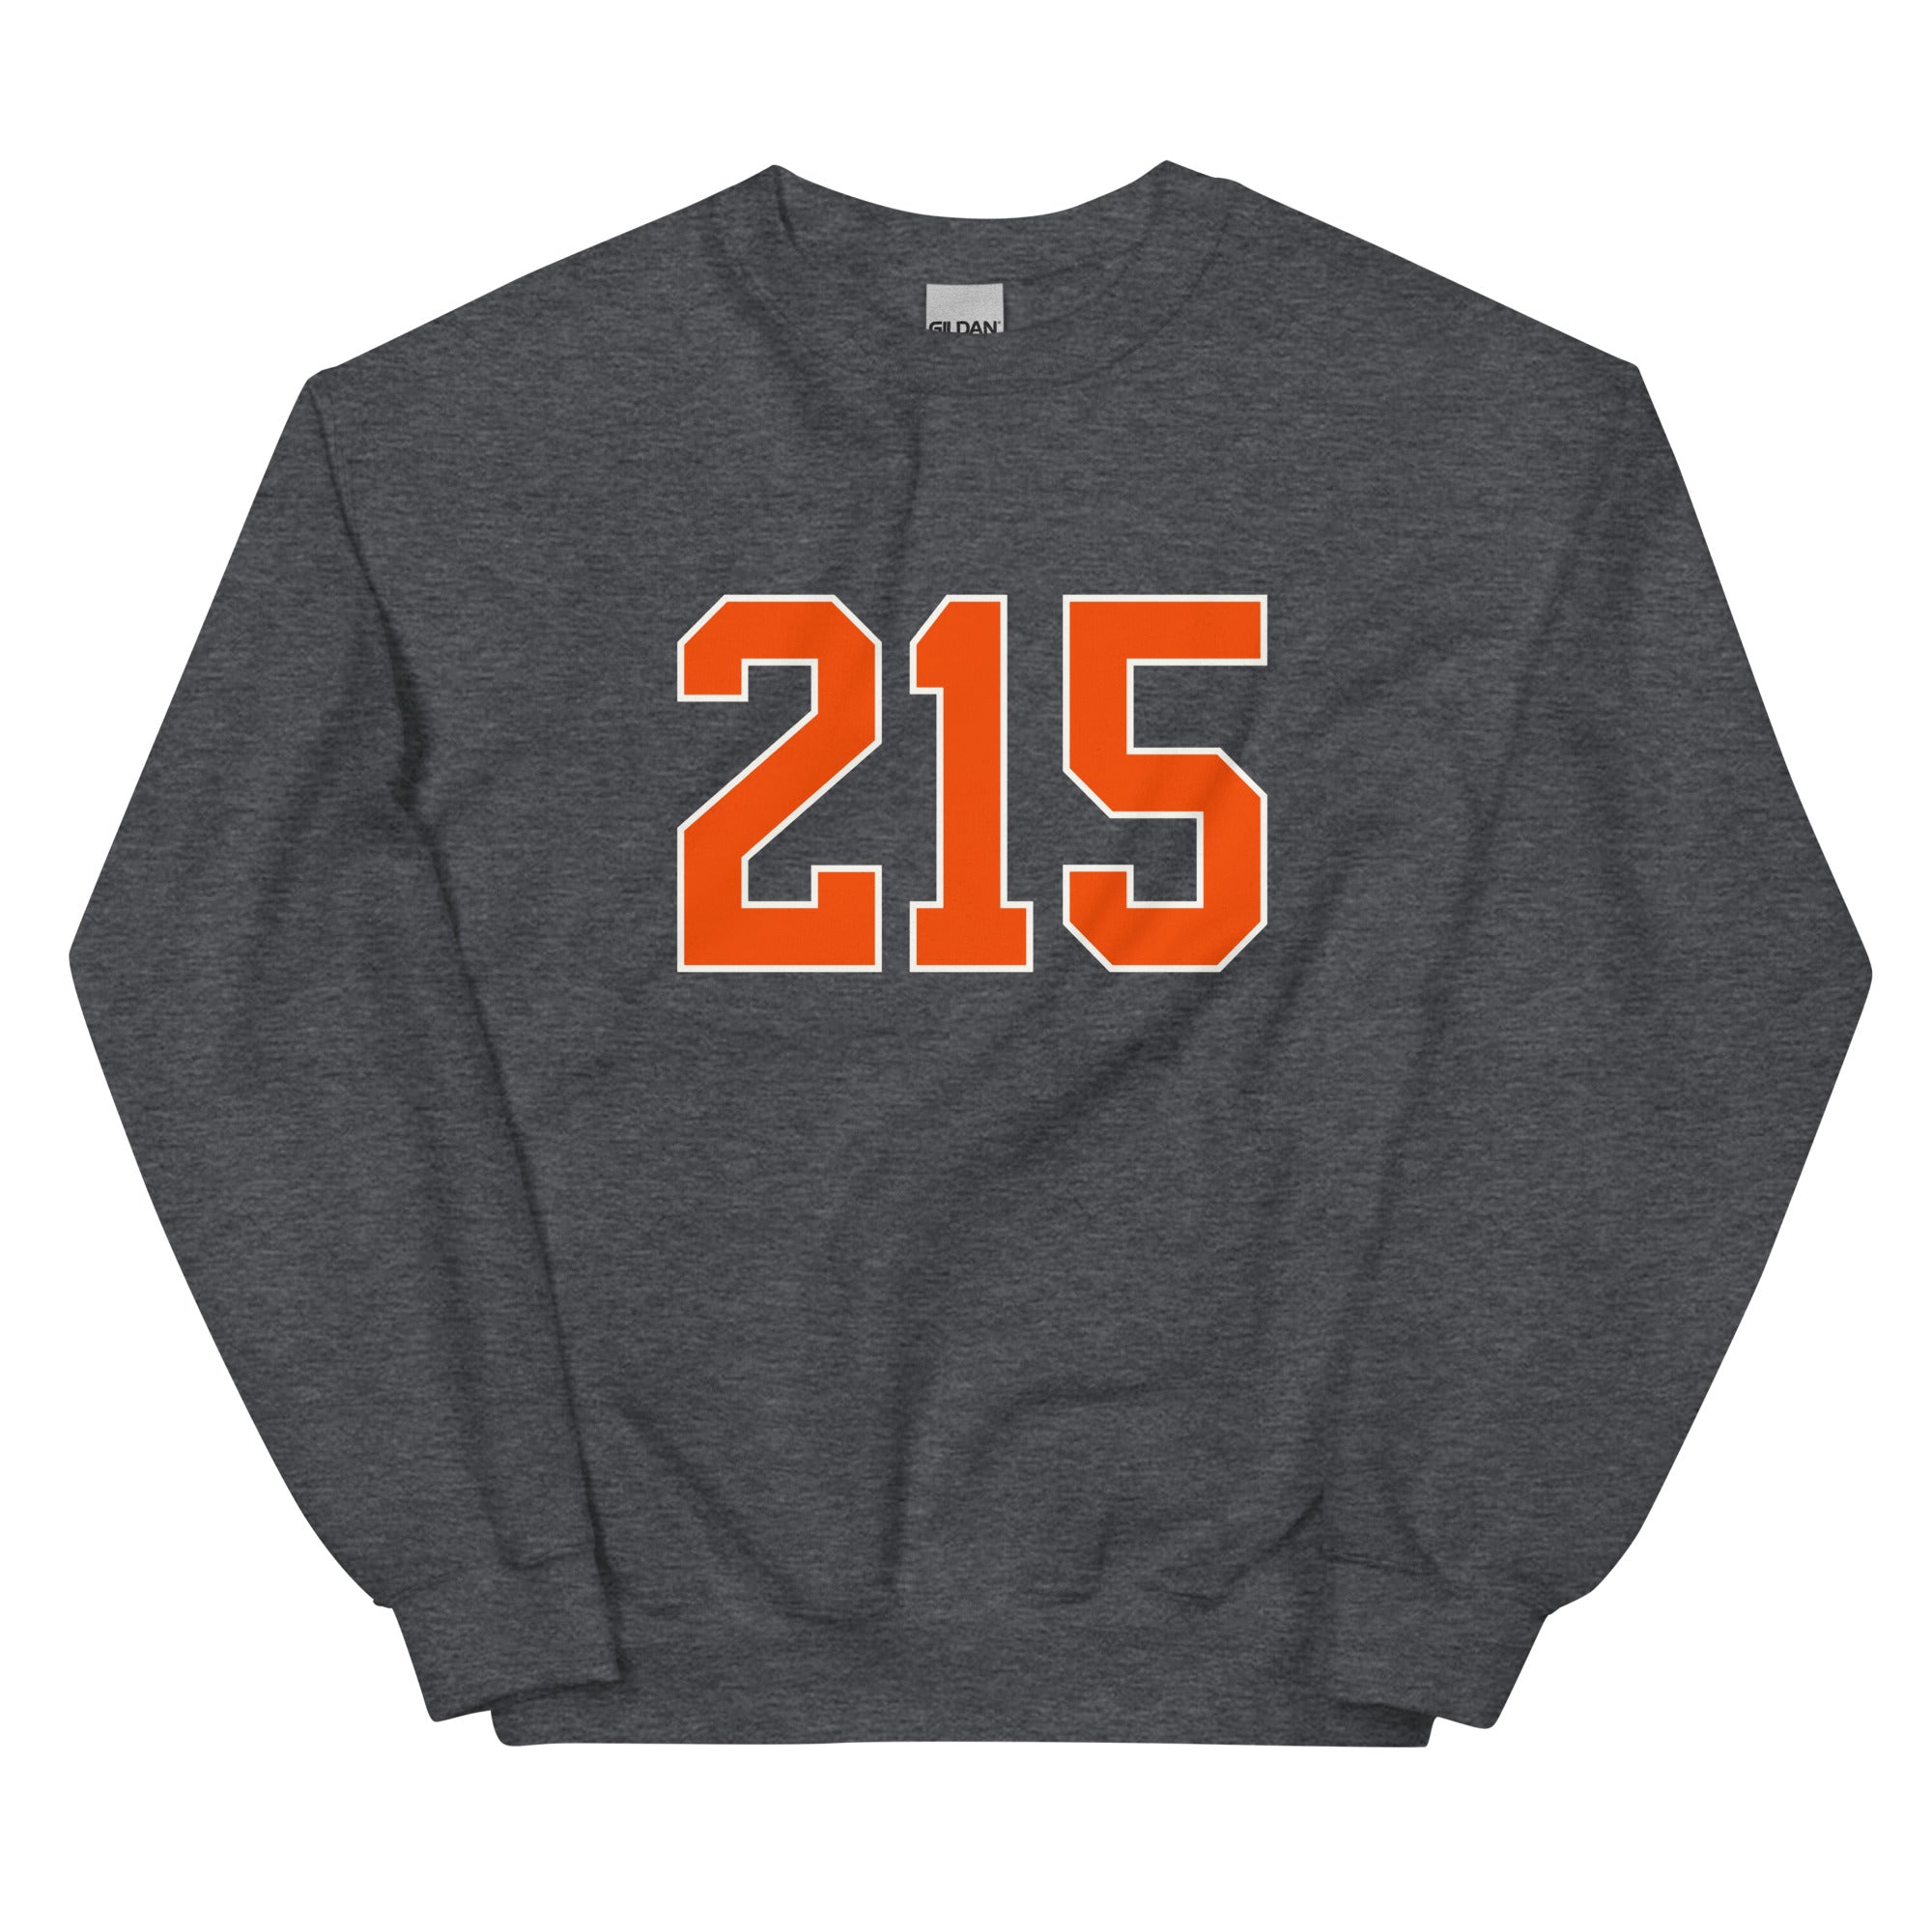 "215 Bully" Sweatshirt